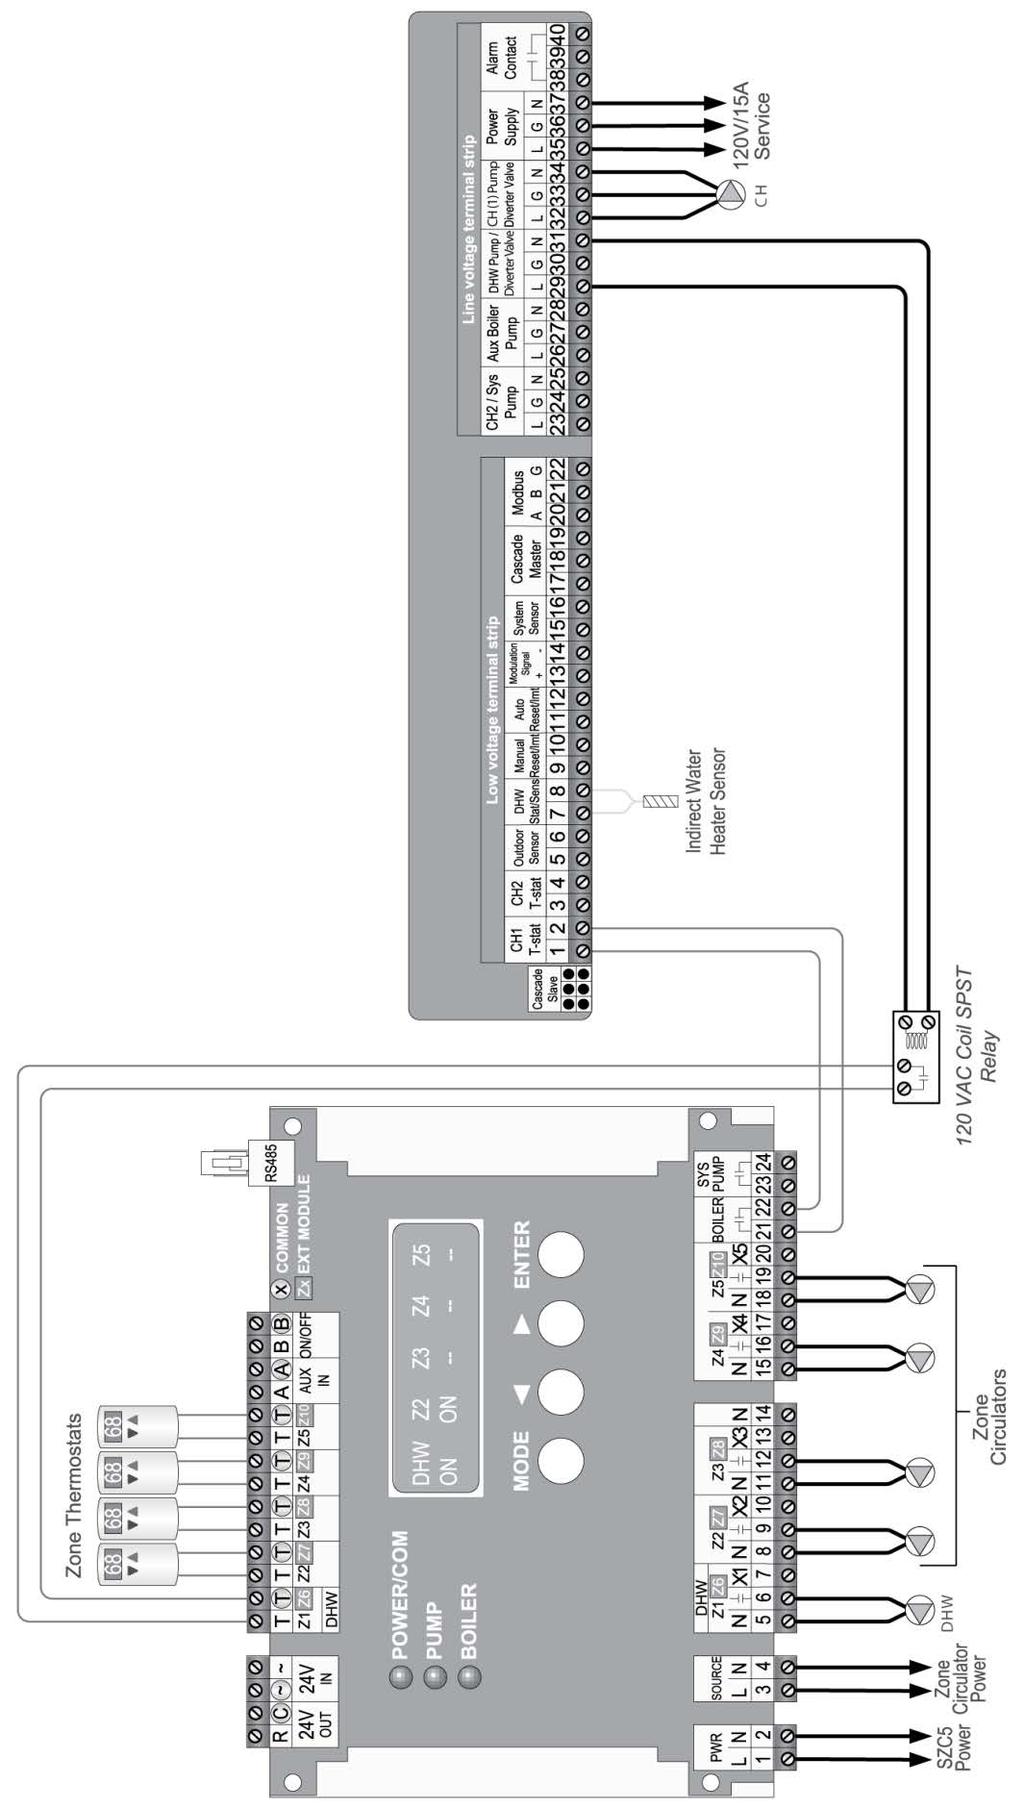 GF-135 Esteem 399 Low NOx Boiler Chapter 9 OMM-0089_0A Installation, Operation & Maintenance Manual External Wiring Figure 9-2: Multiple Zone